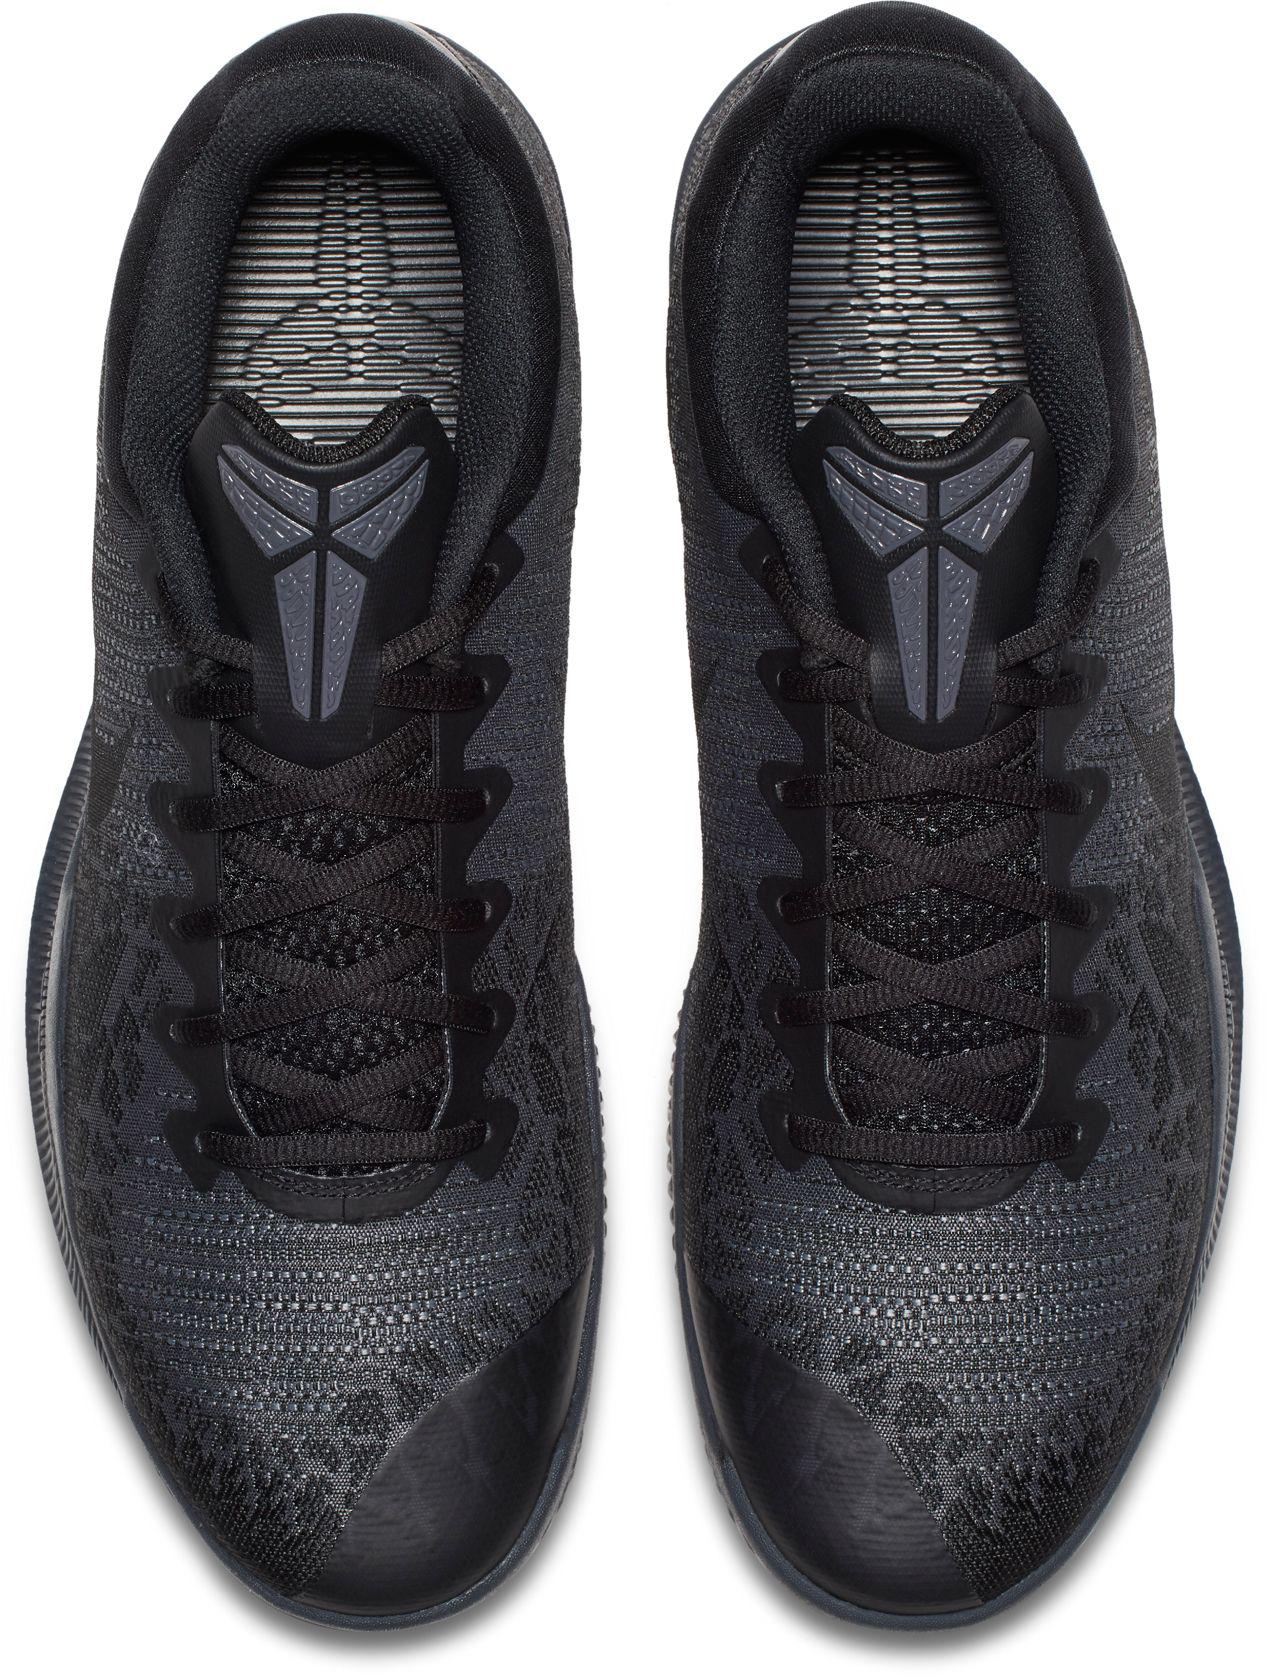 Nike Rubber Kobe Mamba Rage Basketball Shoes in Black/Dark Grey (Black ...